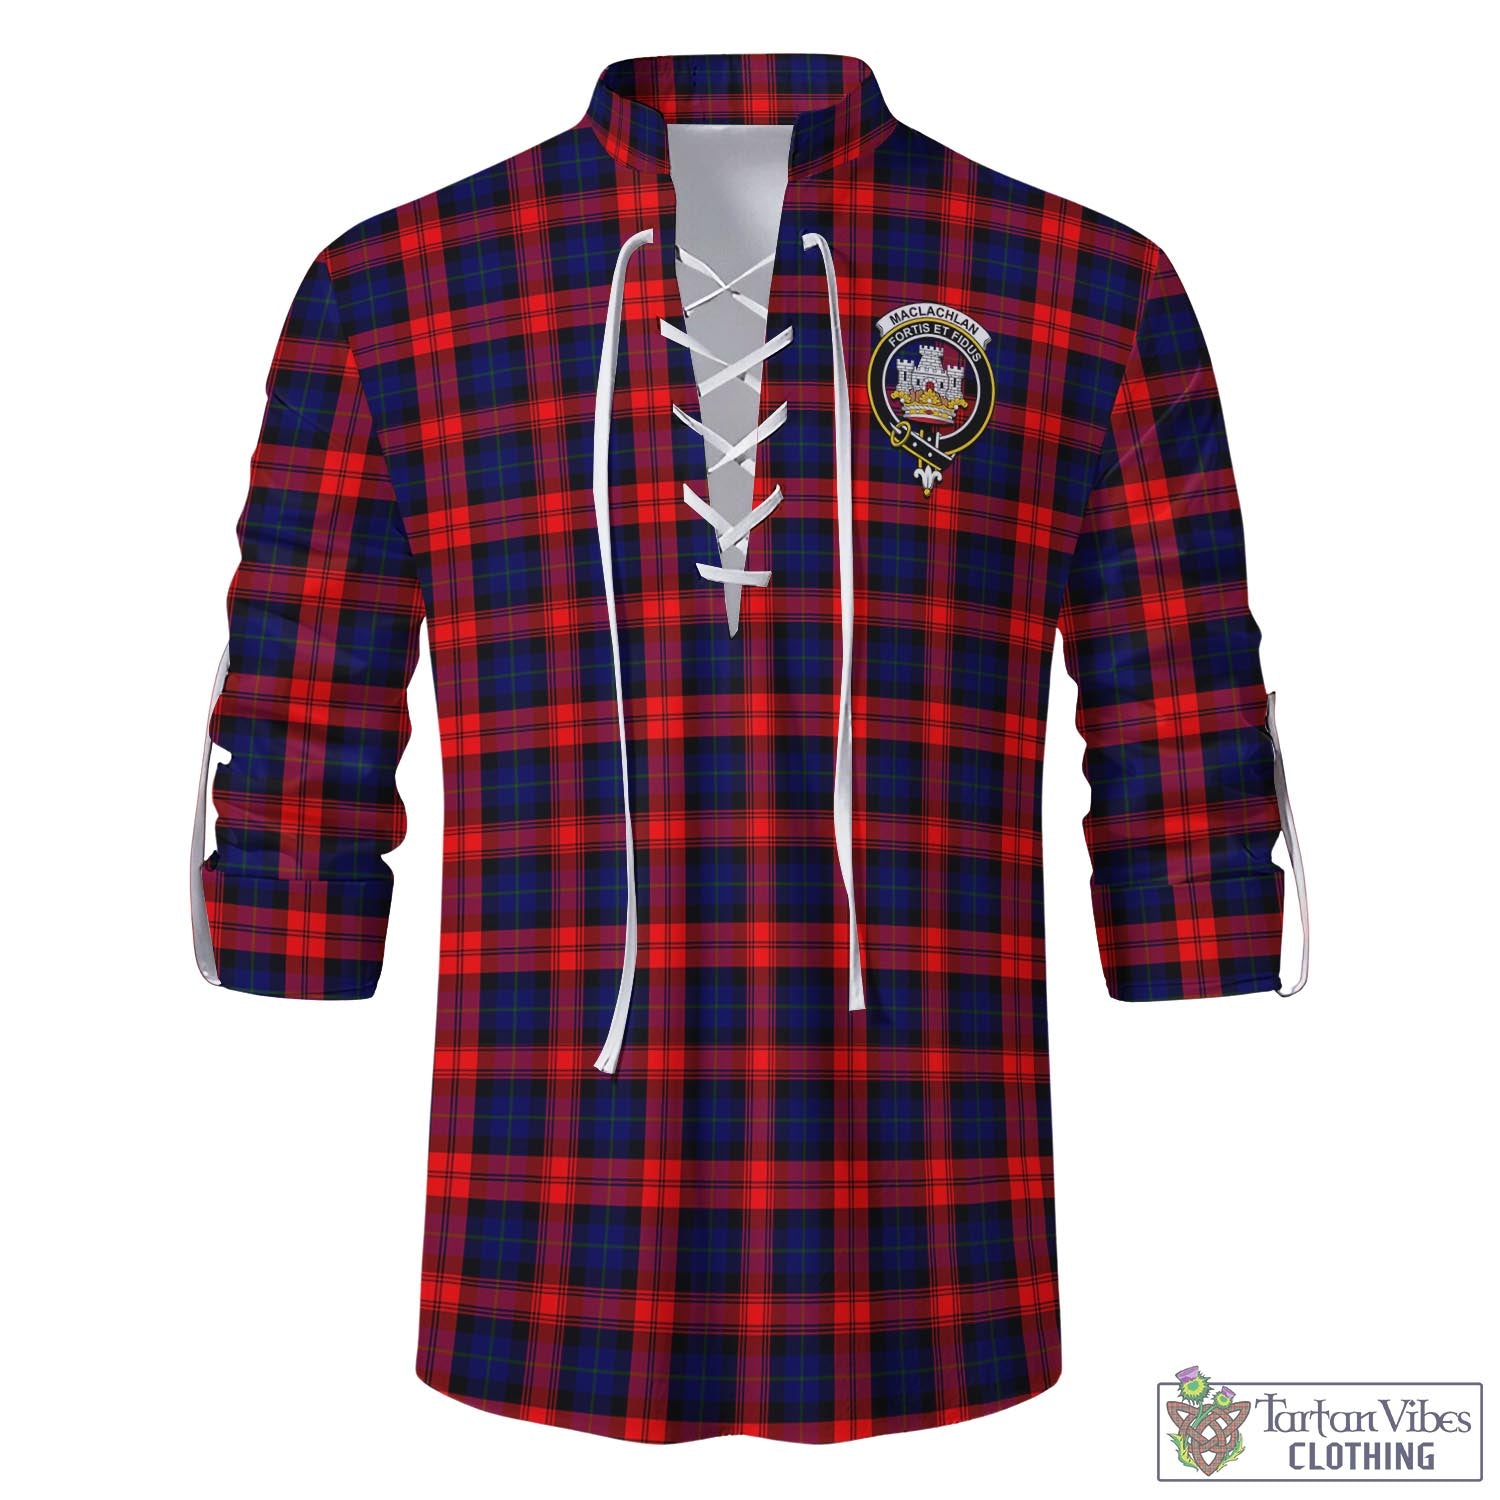 Tartan Vibes Clothing MacLachlan Modern Tartan Men's Scottish Traditional Jacobite Ghillie Kilt Shirt with Family Crest